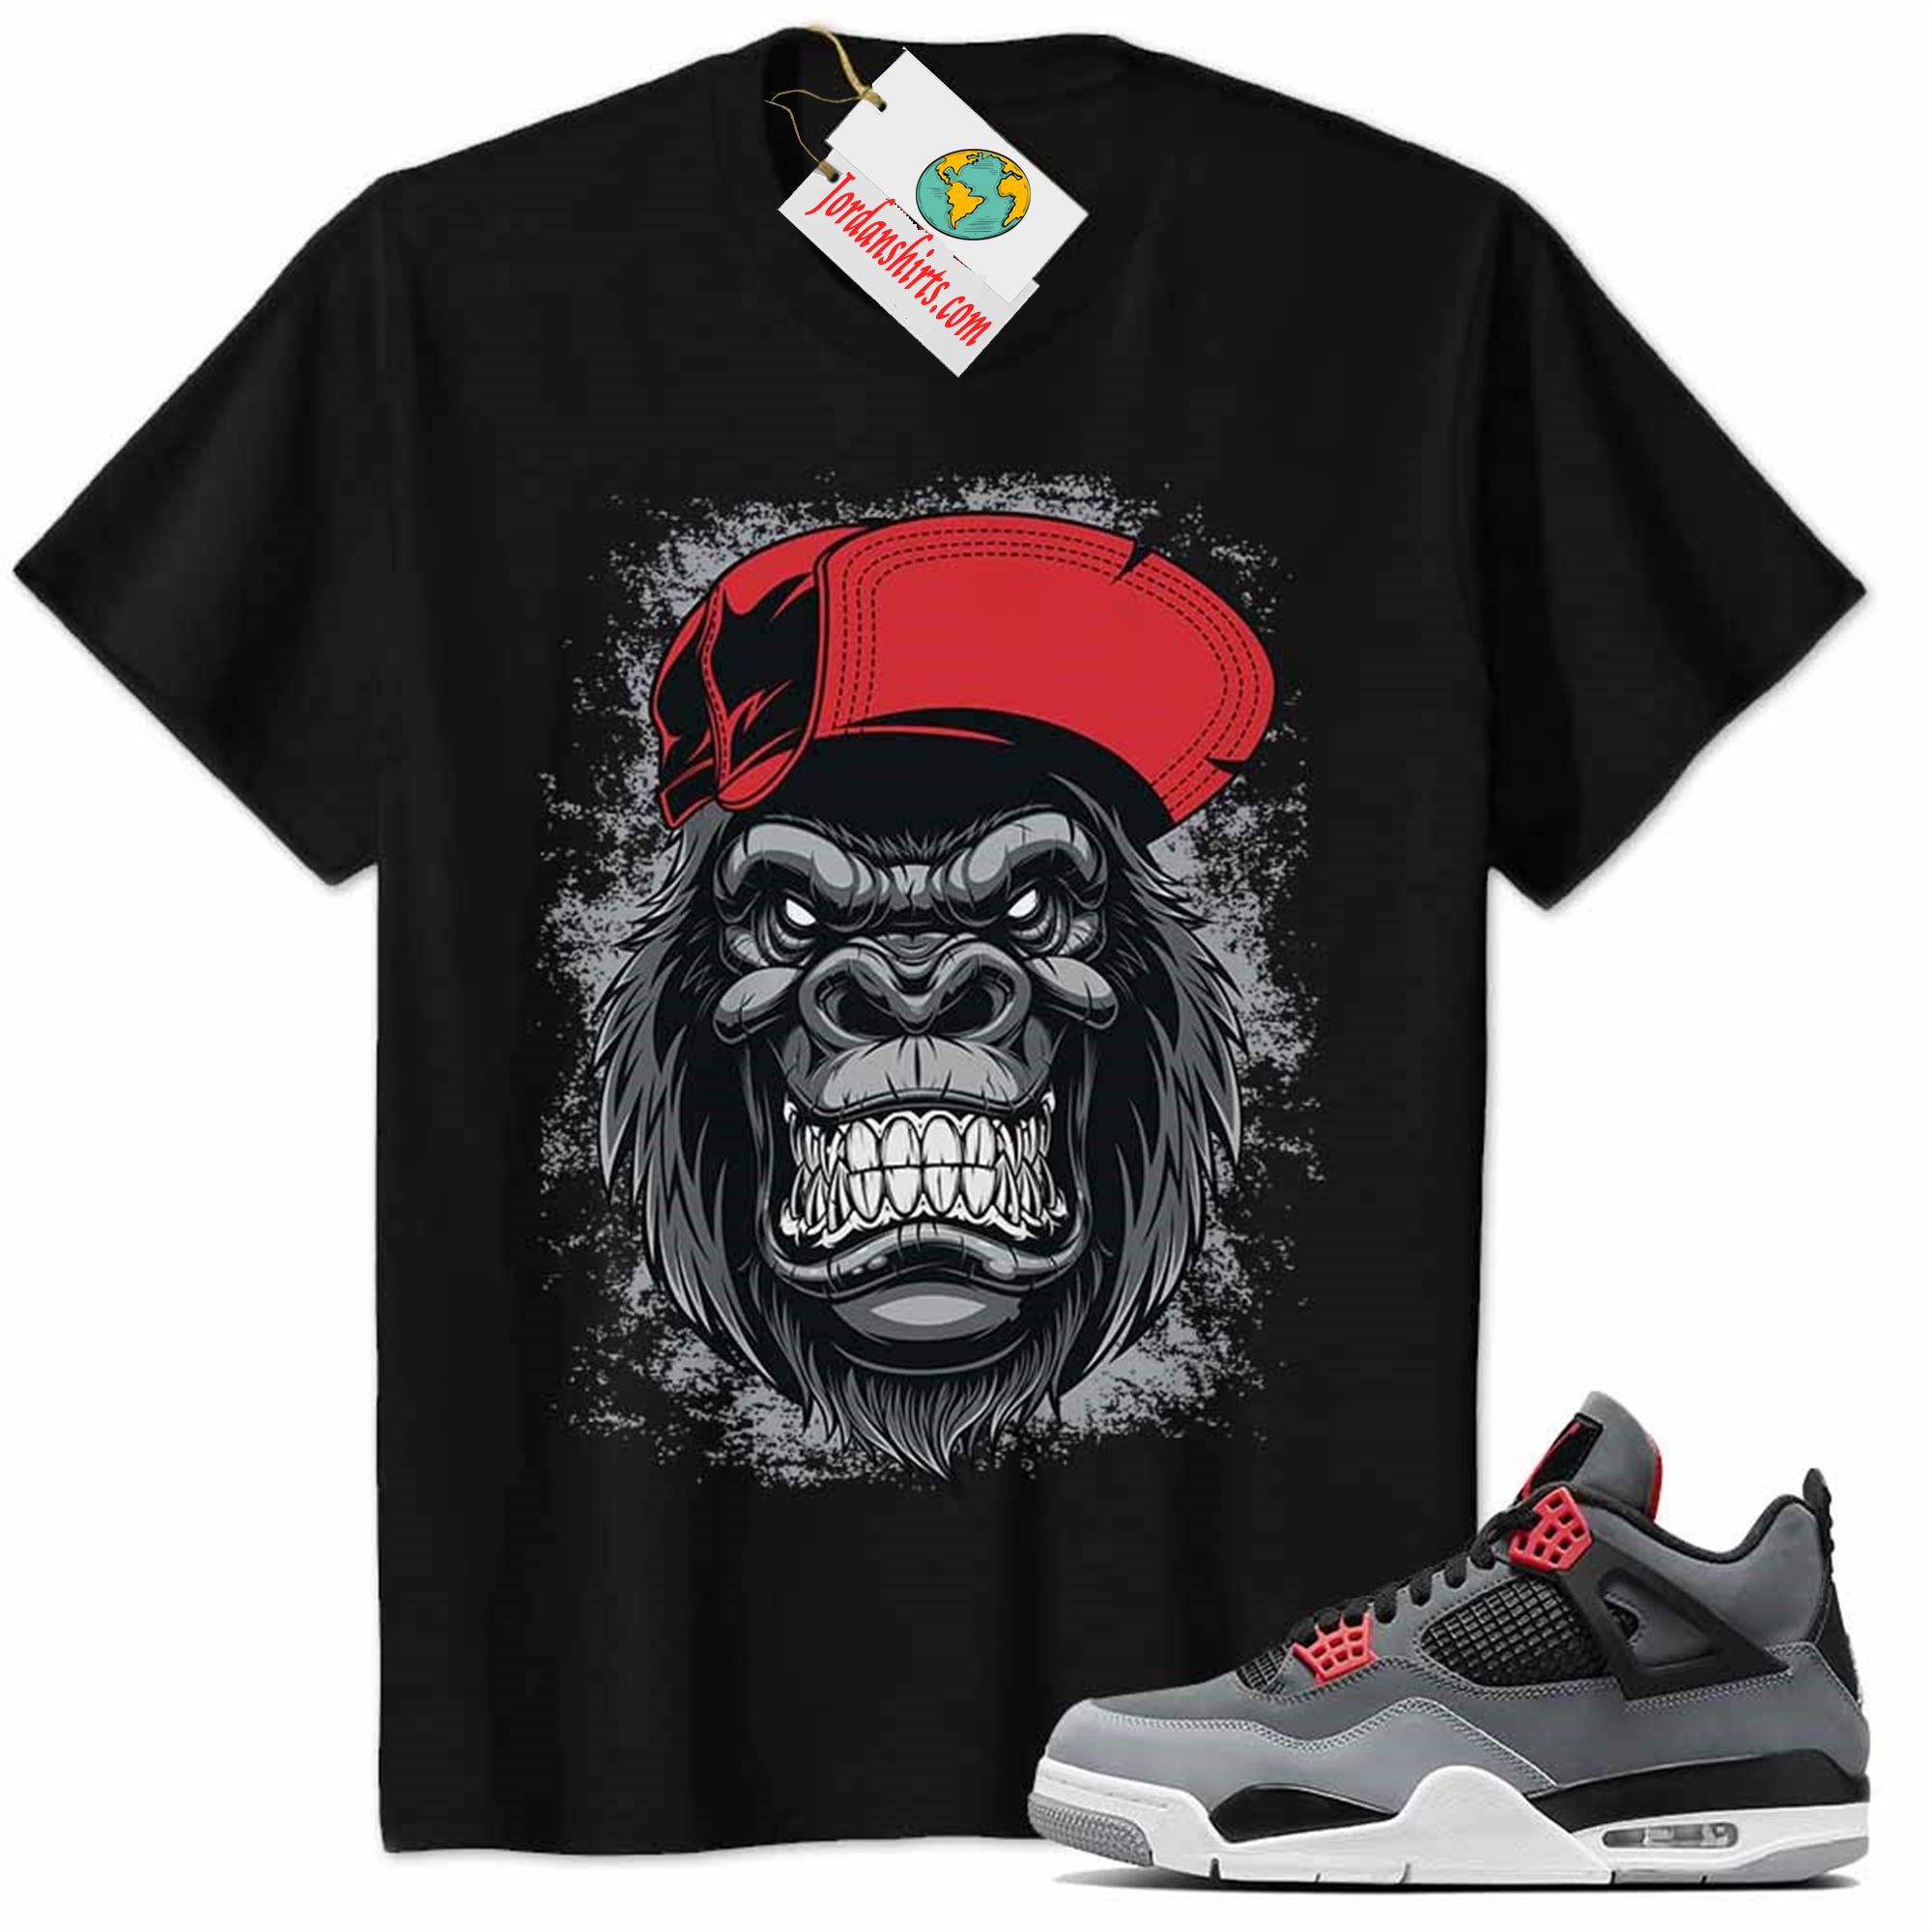 Jordan 4 Shirt, Jordan 4 Infrared 23 Shirt Shirt Ferocious Gorilla Black Size Up To 5xl